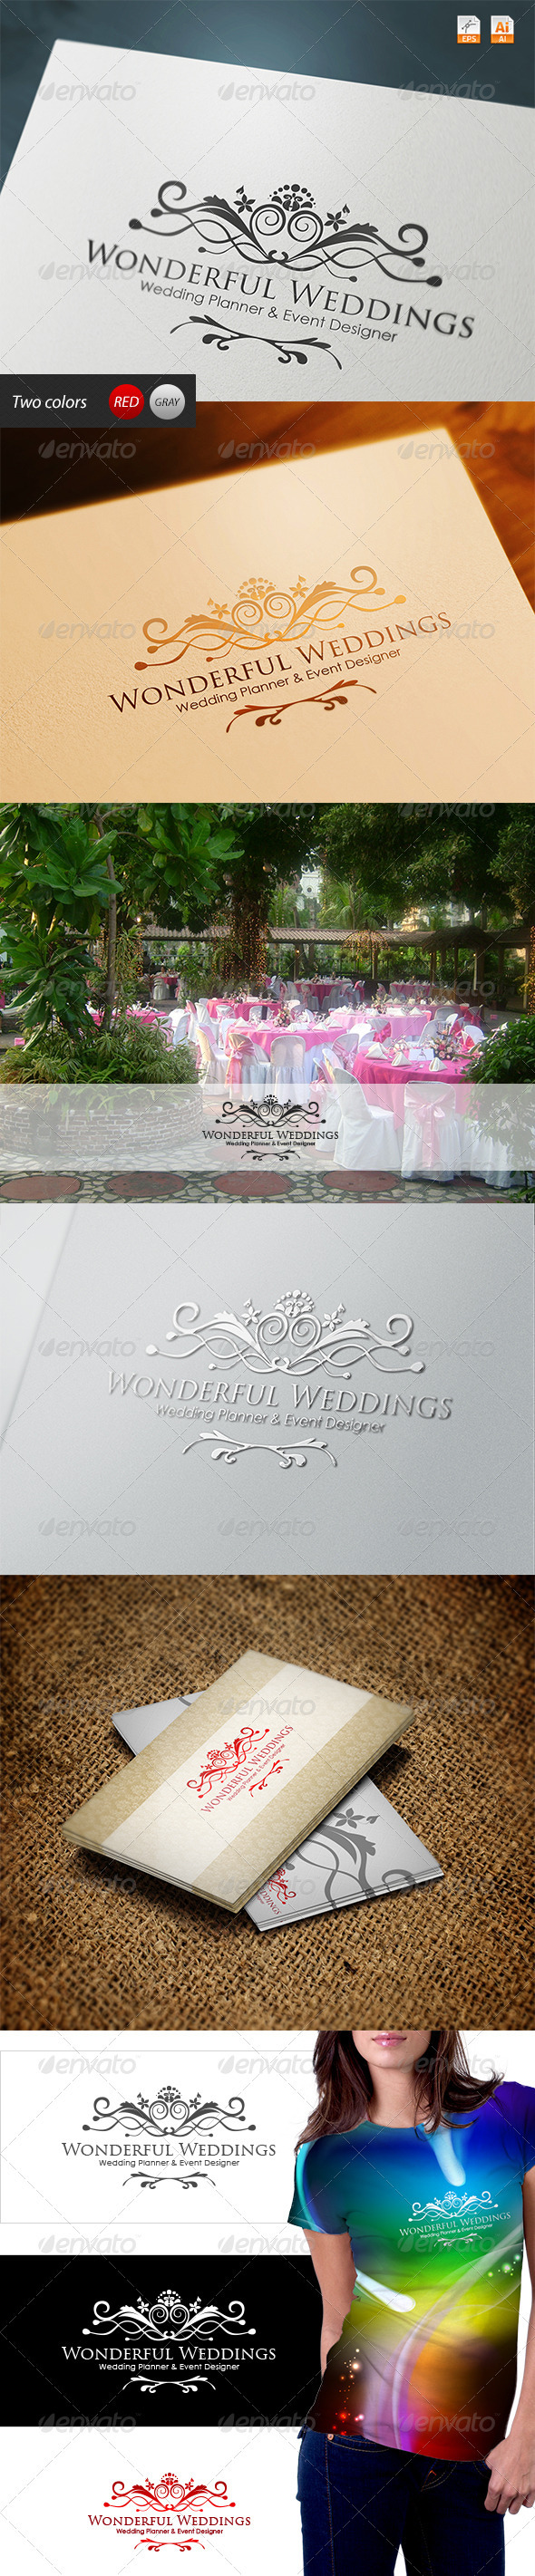 Wonderful Weddings - Planner and Event Designer